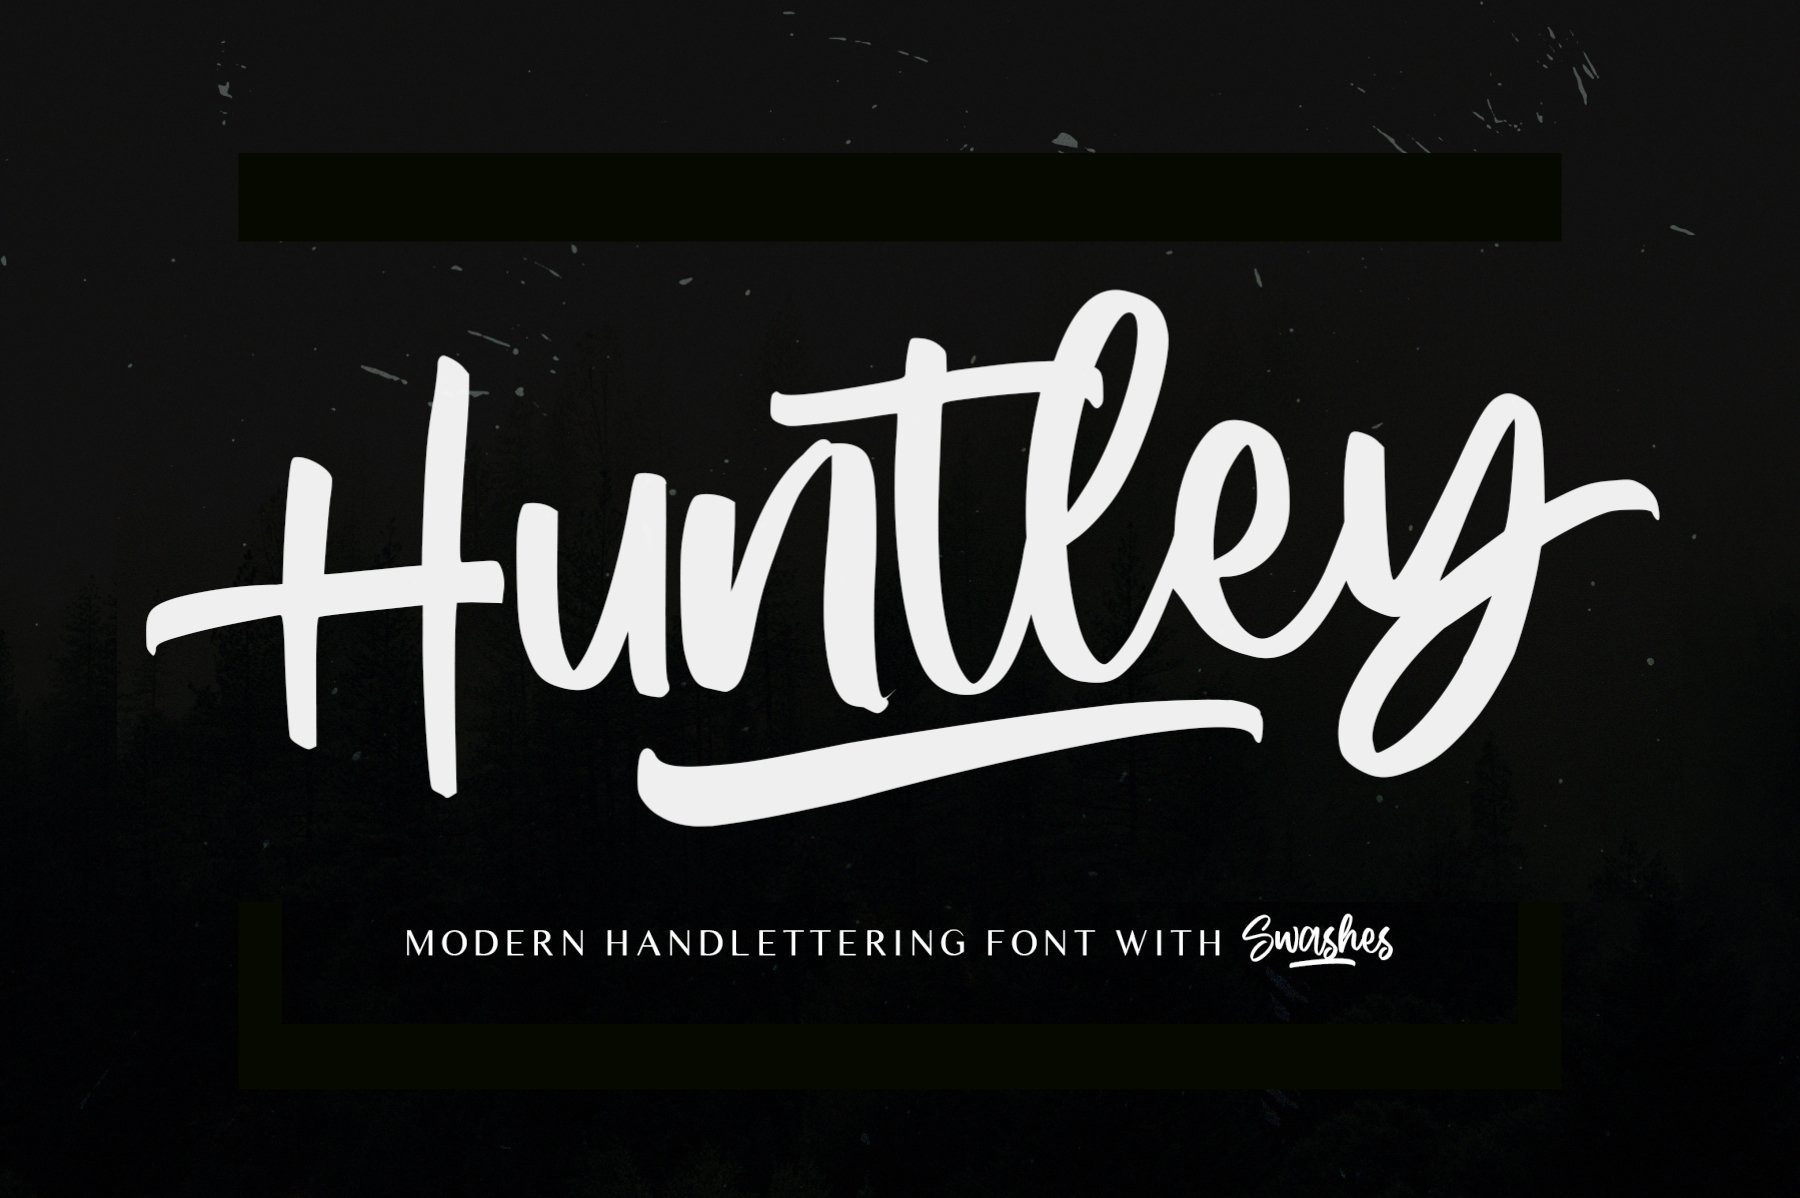 Huntley - Modern Handlettering Swash cover image.